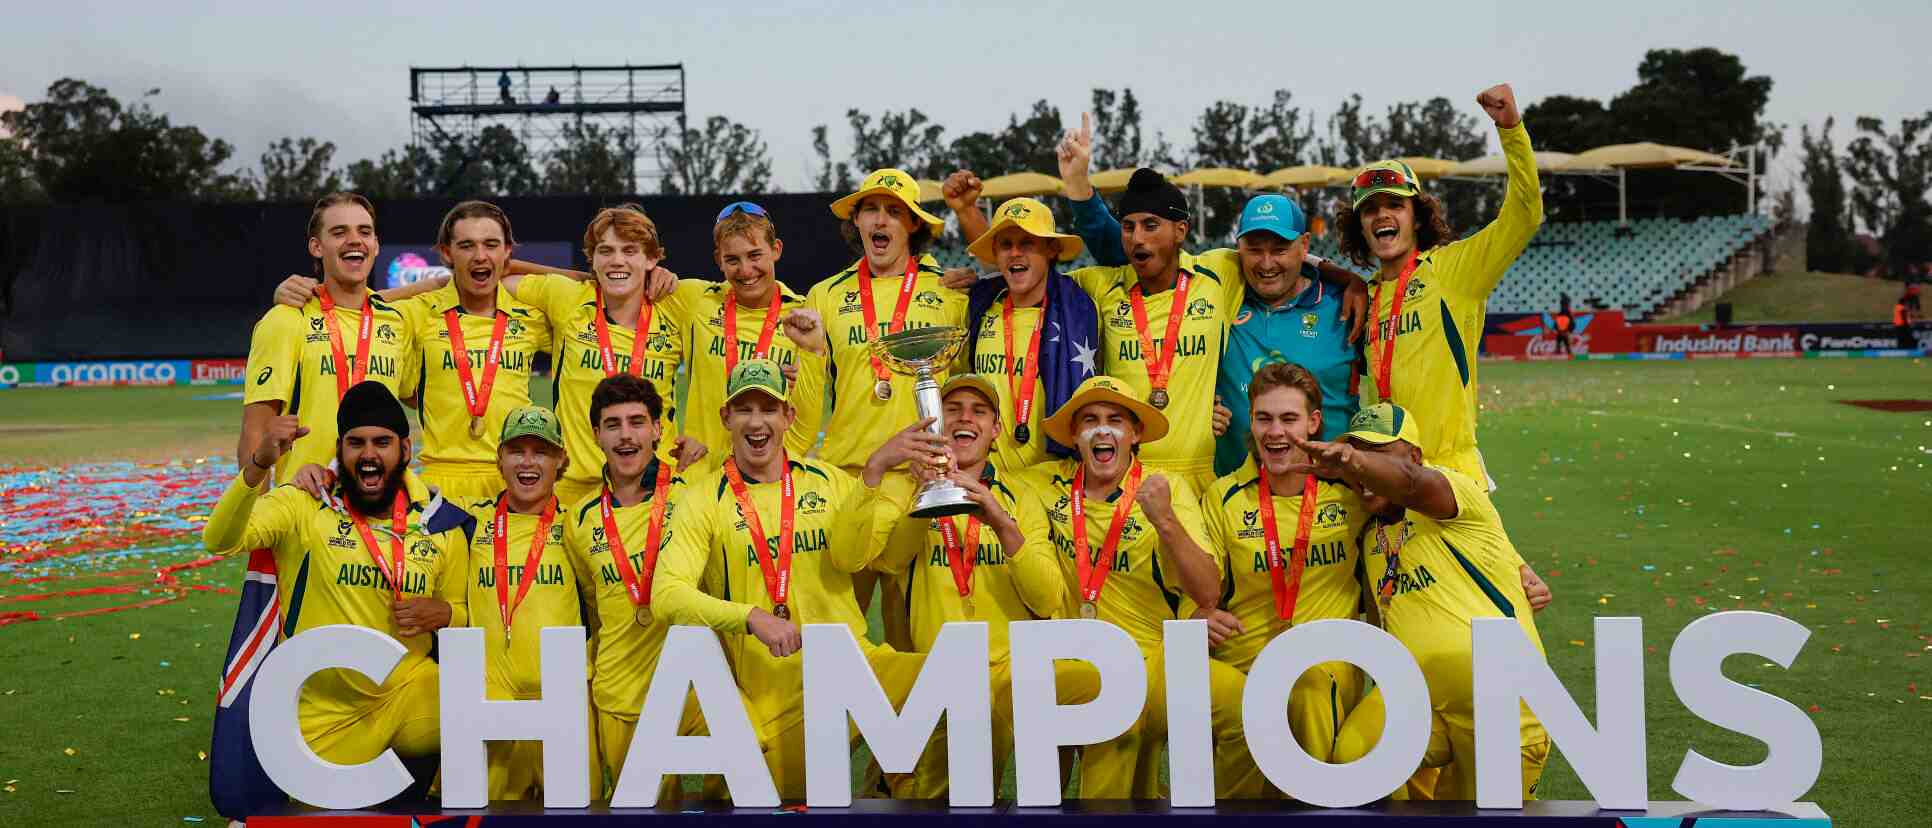 Australia defeats India handily to win the U19 Men’s Cricket World Cup.